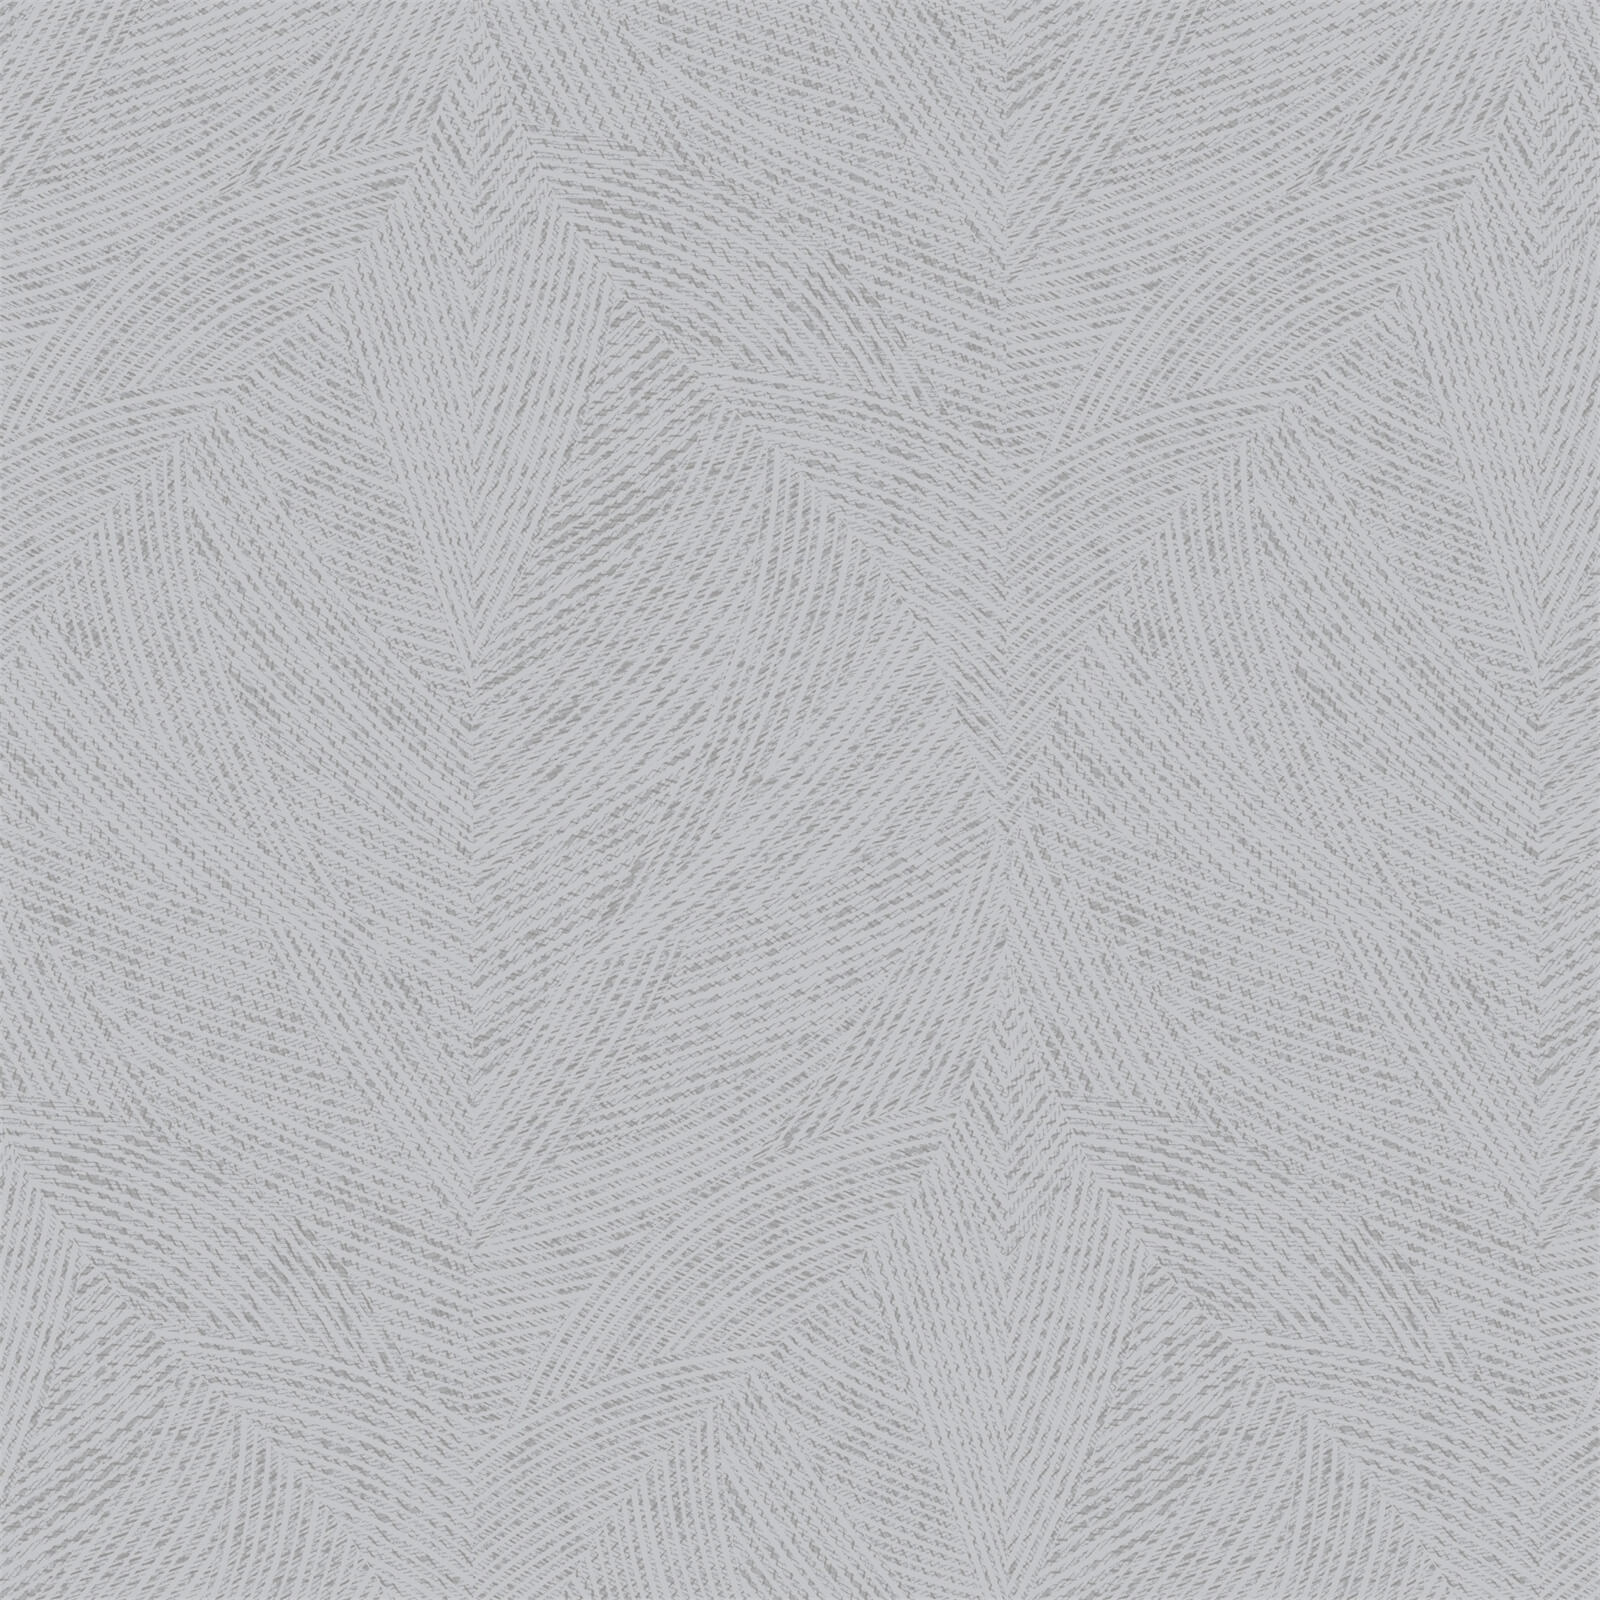 Holden Decor Toluca Geometric Textured Metallic Grey Wallpaper